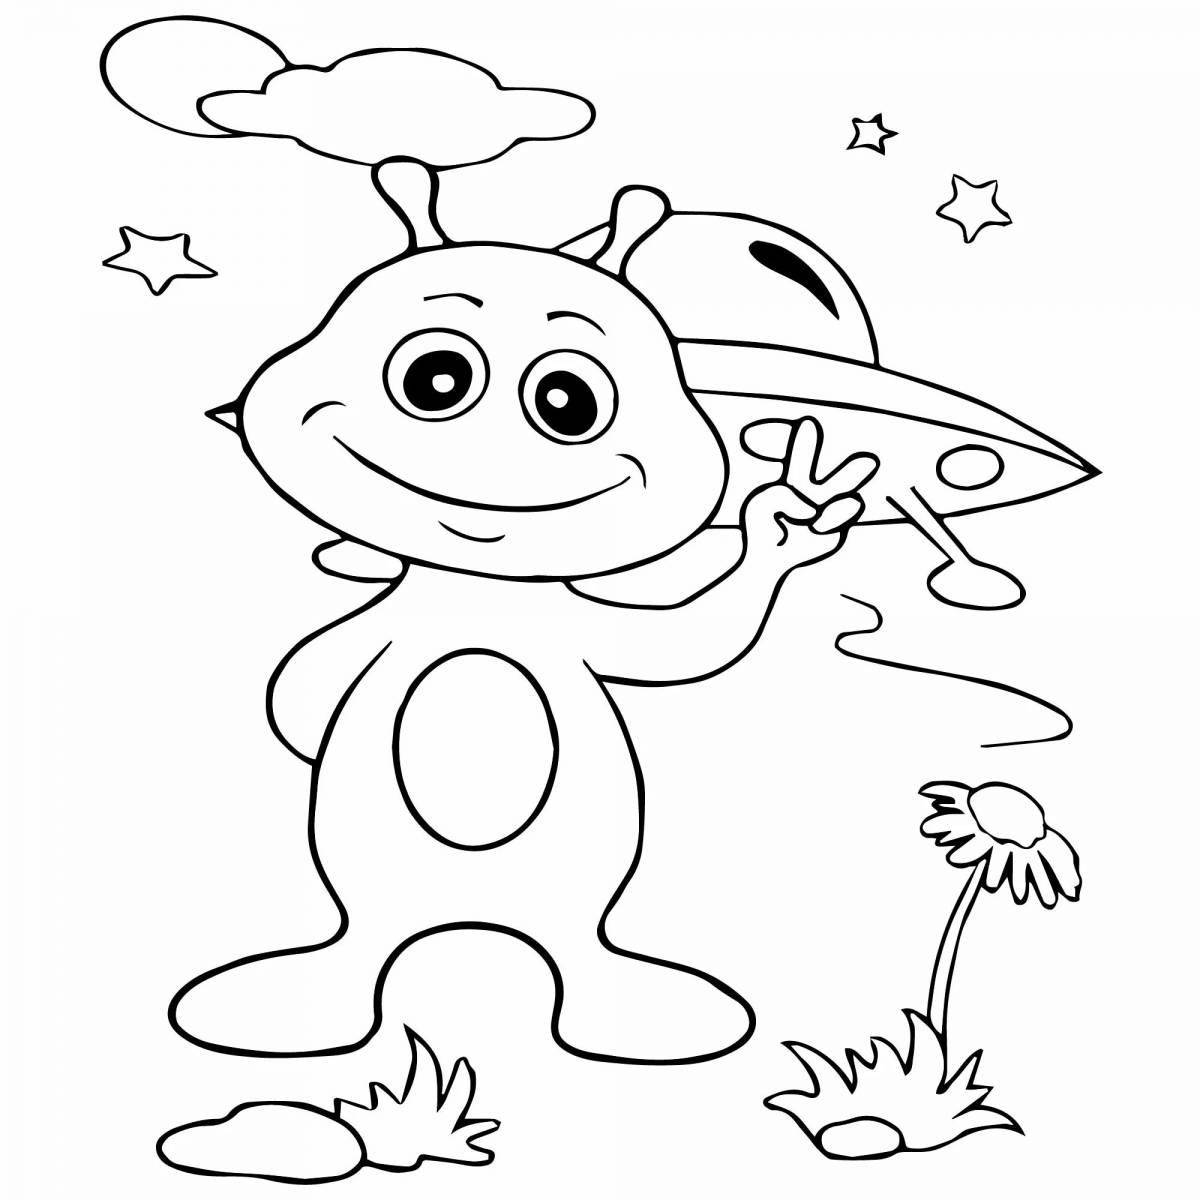 Color-joy aliens coloring page for kids